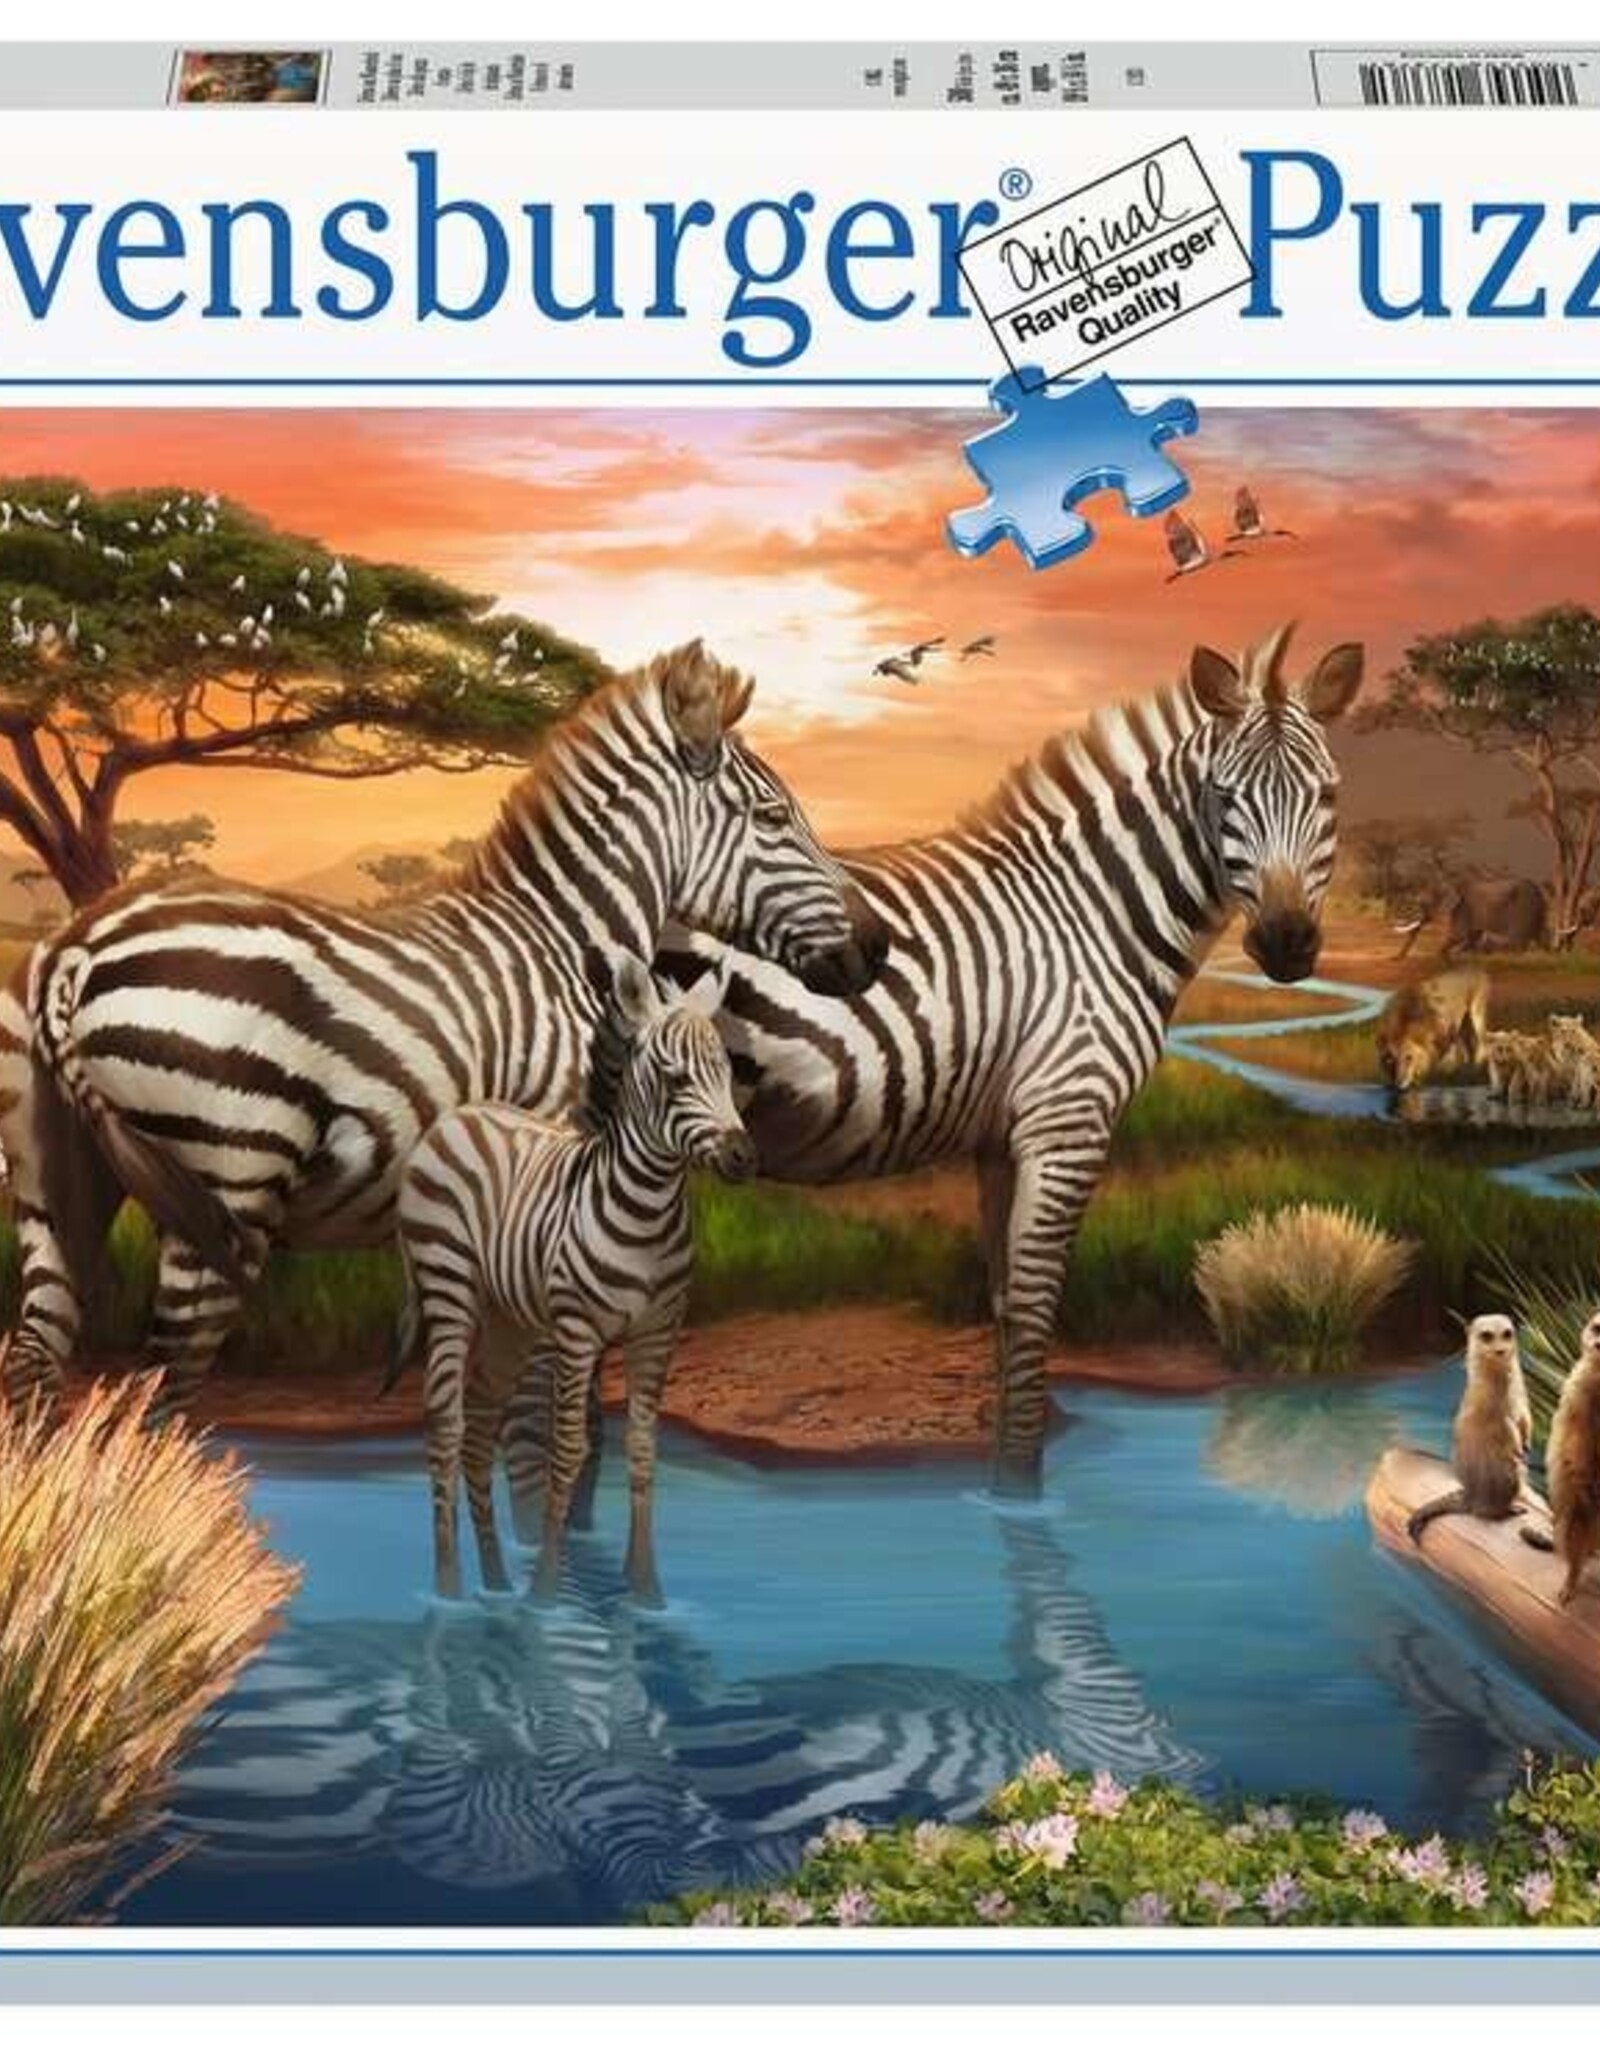 Ravensburger Zebra 500pc RAV17376